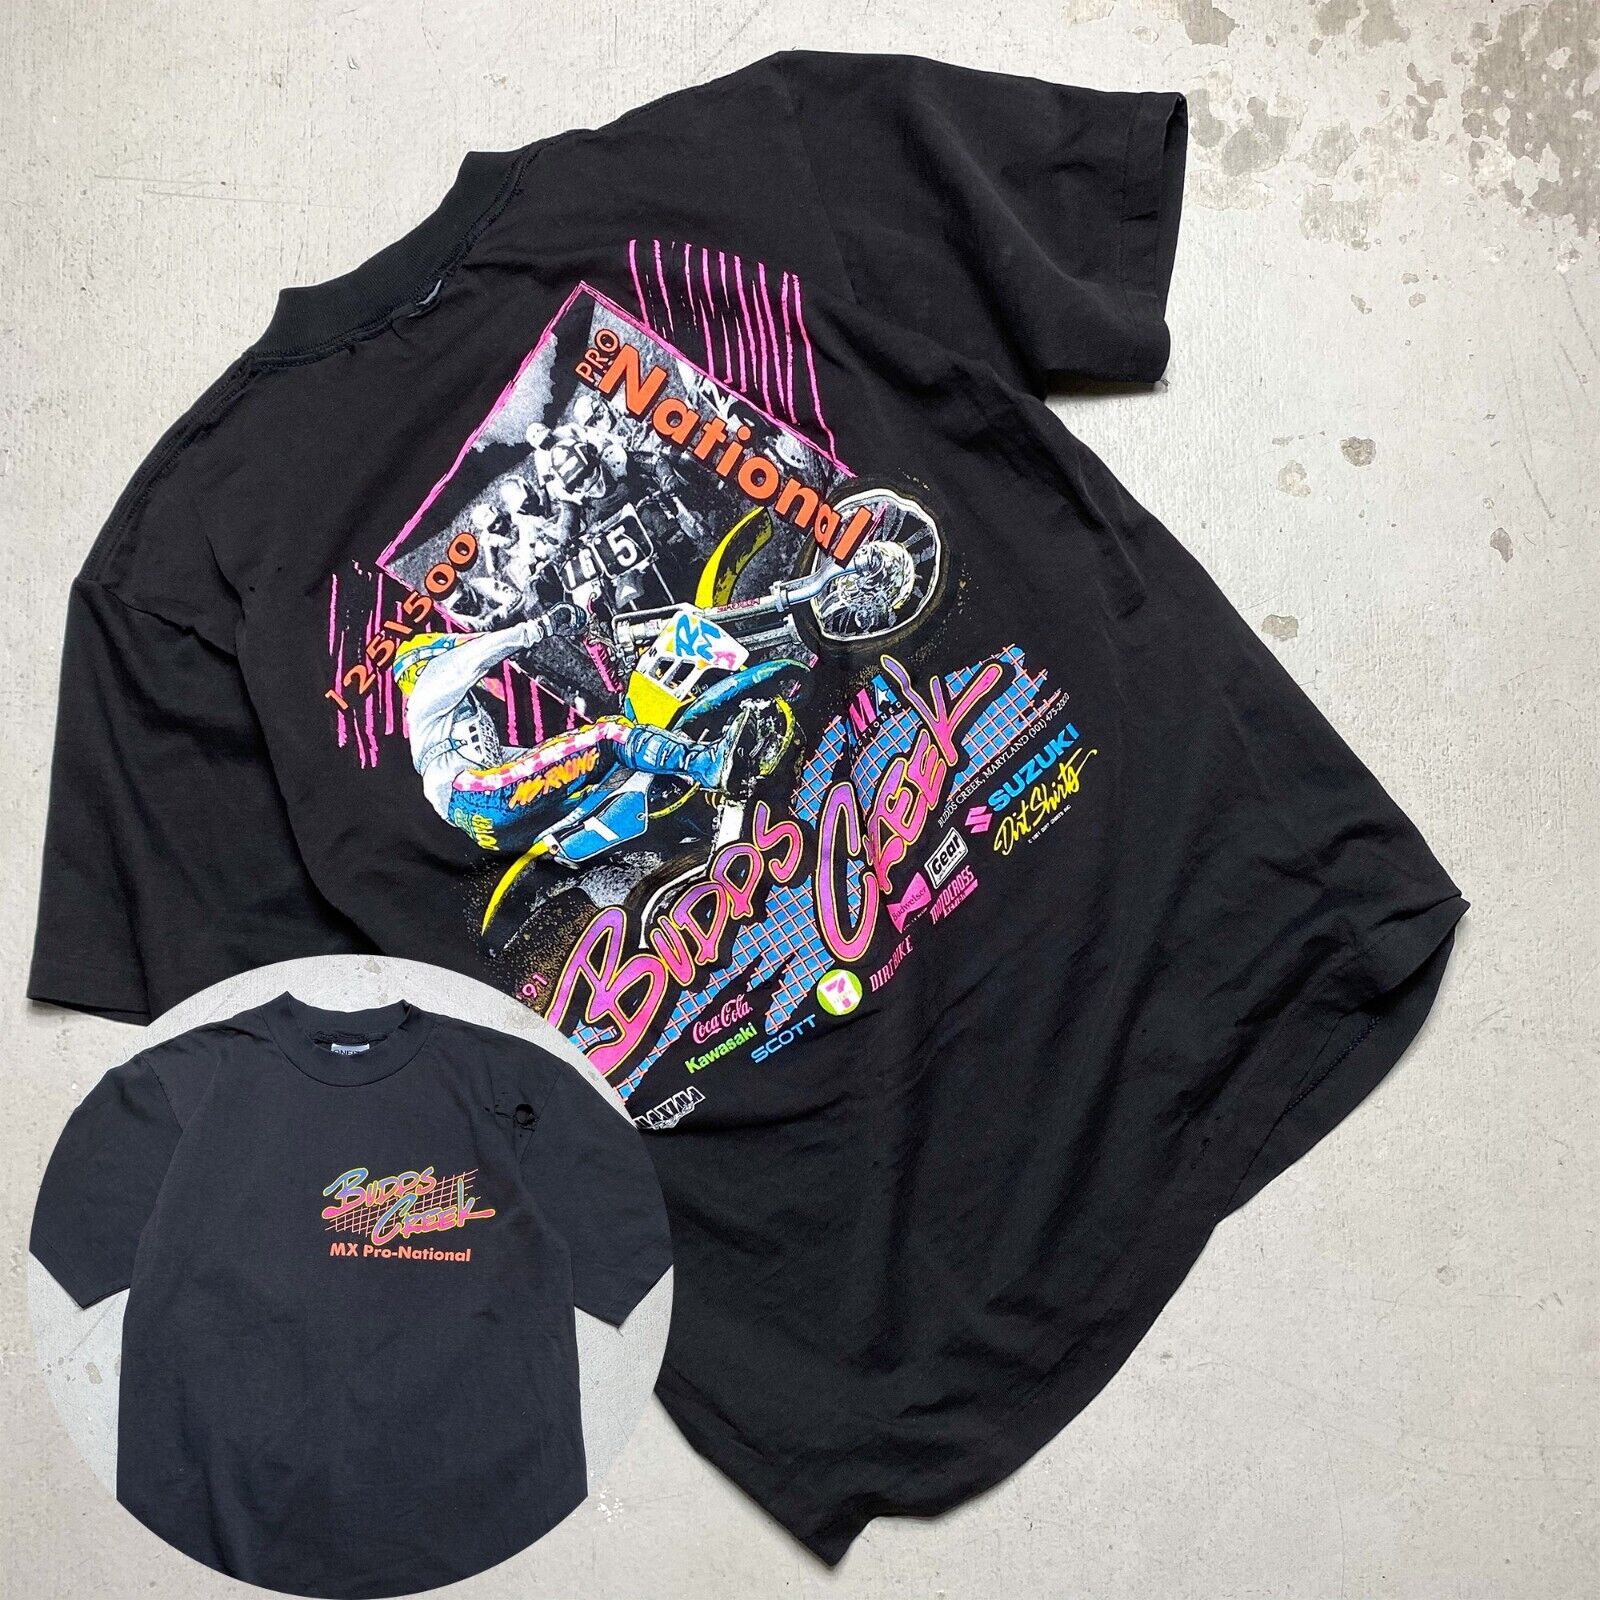 Vintage 1991 Budds Creek Motocross National T-Shirt Cotton Unisex Size S-3XL